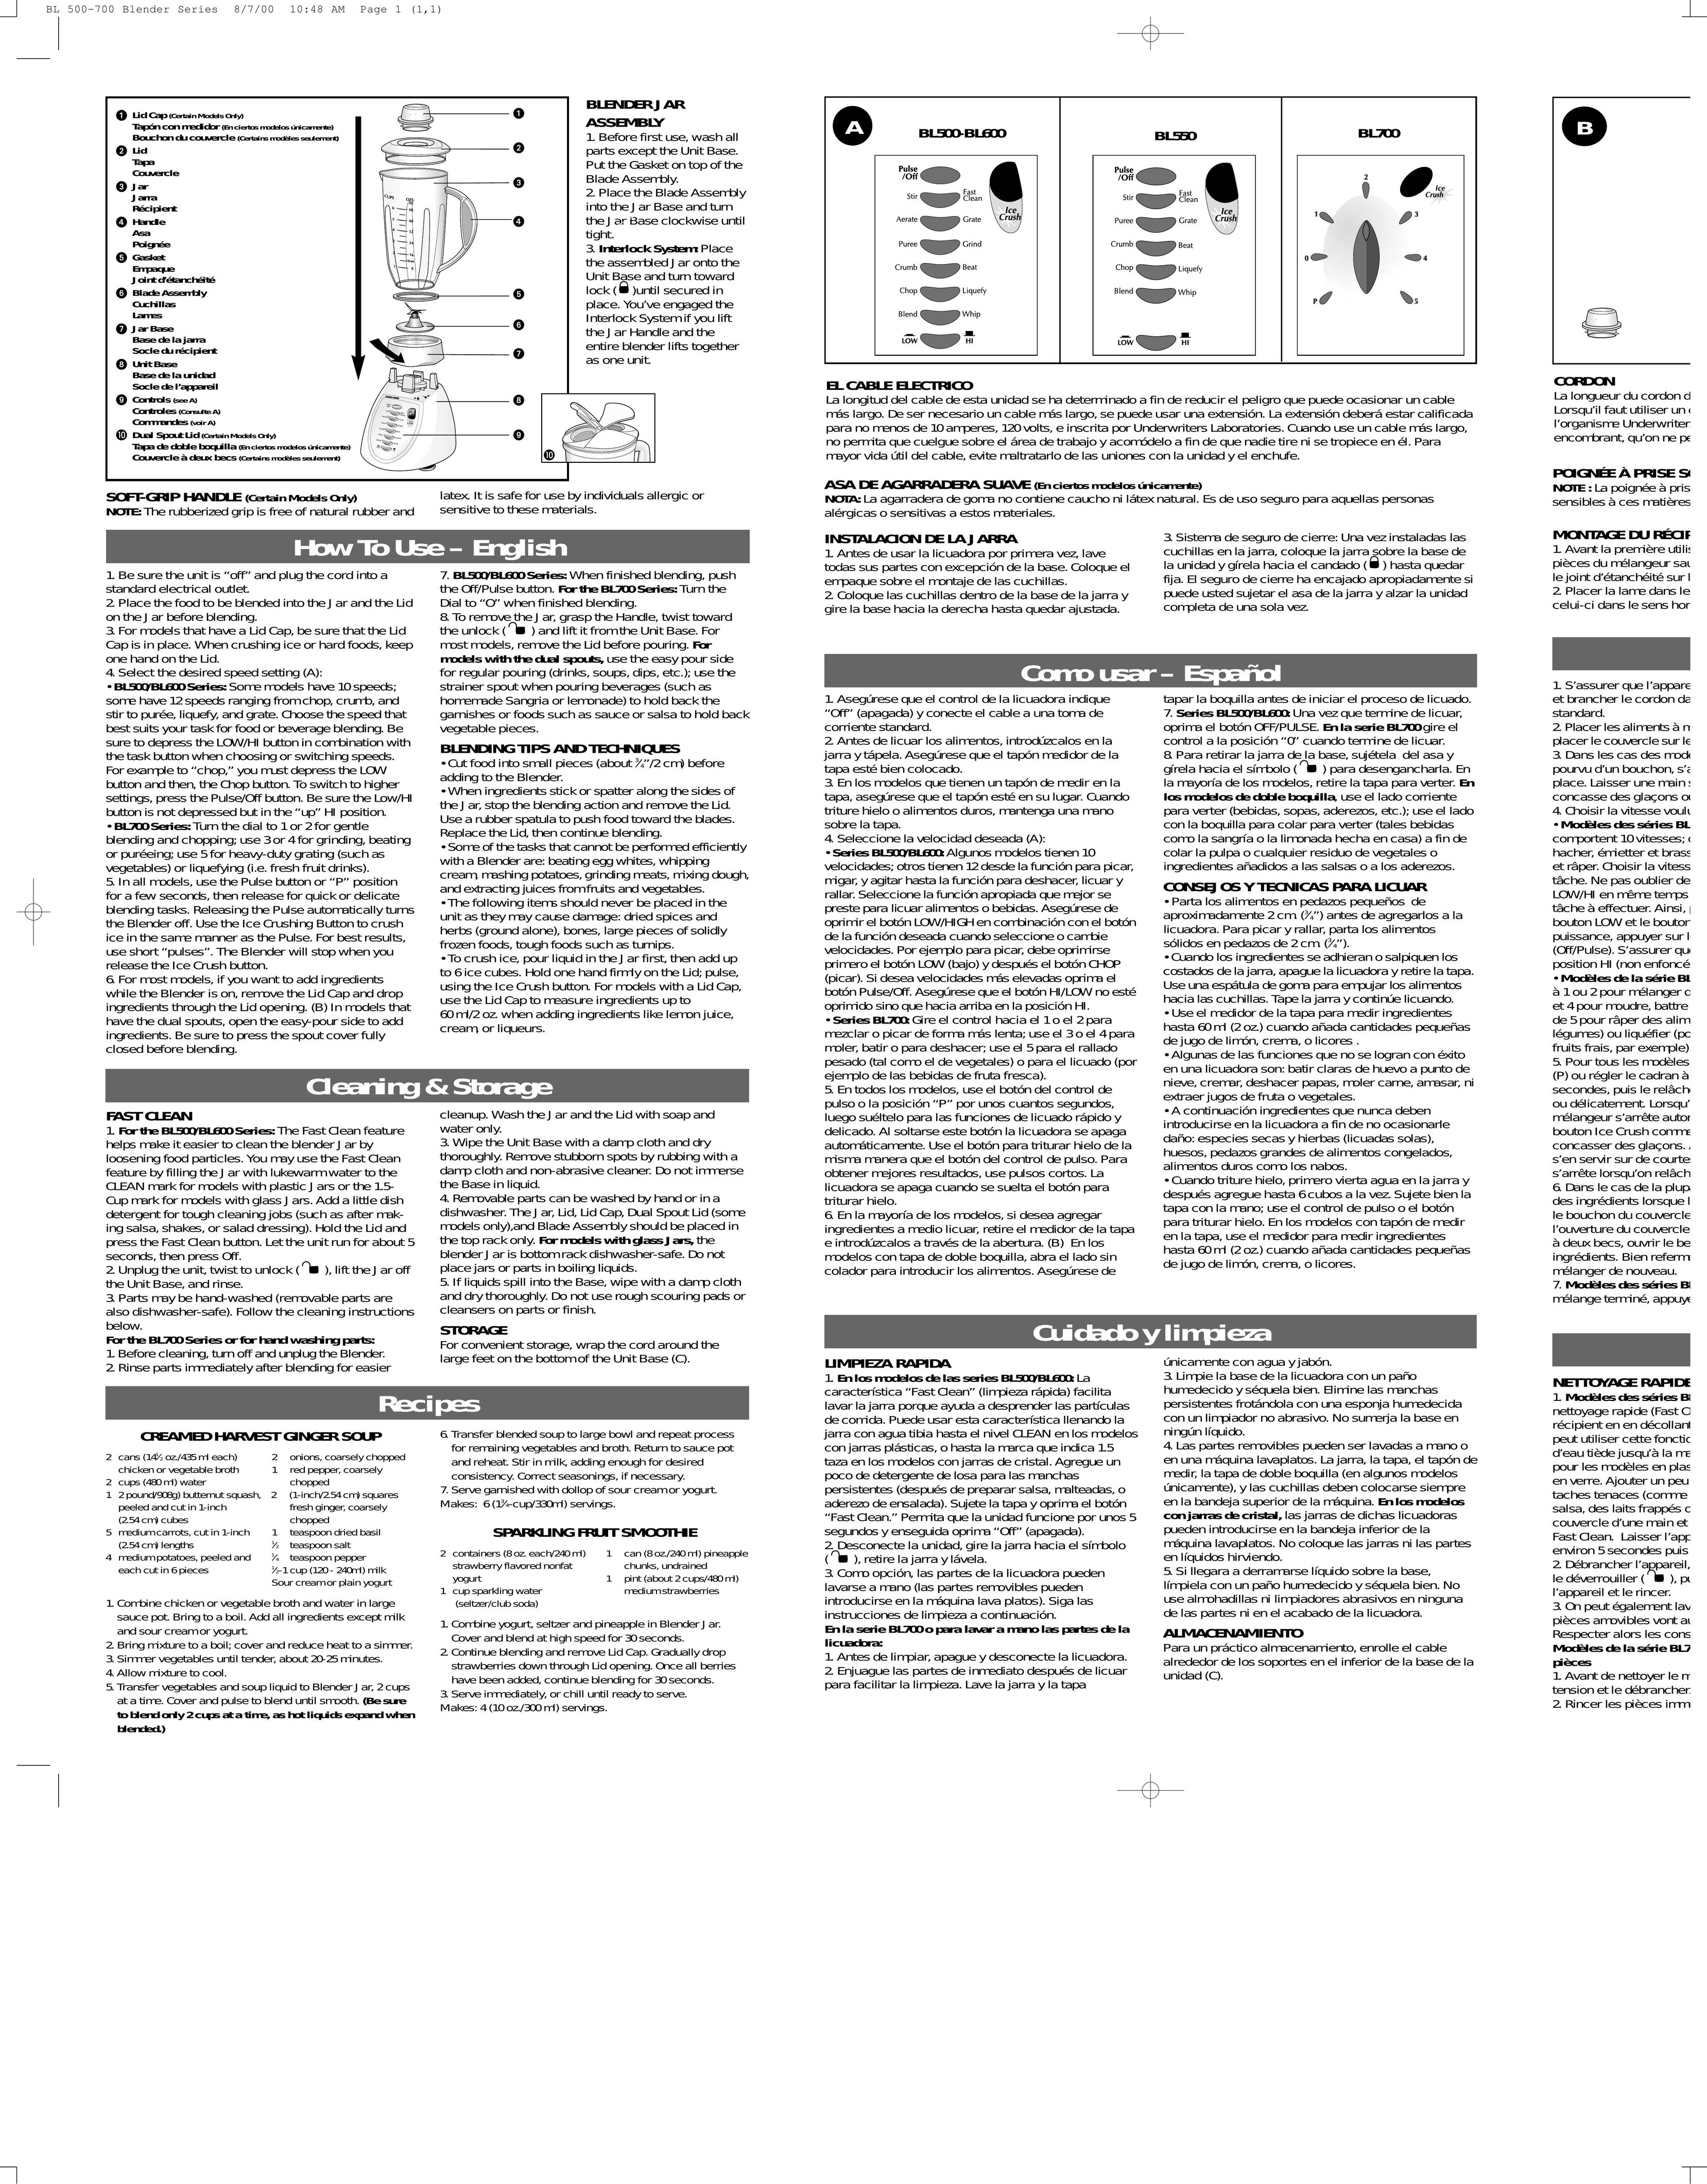 blender 2.79 manual pdf download